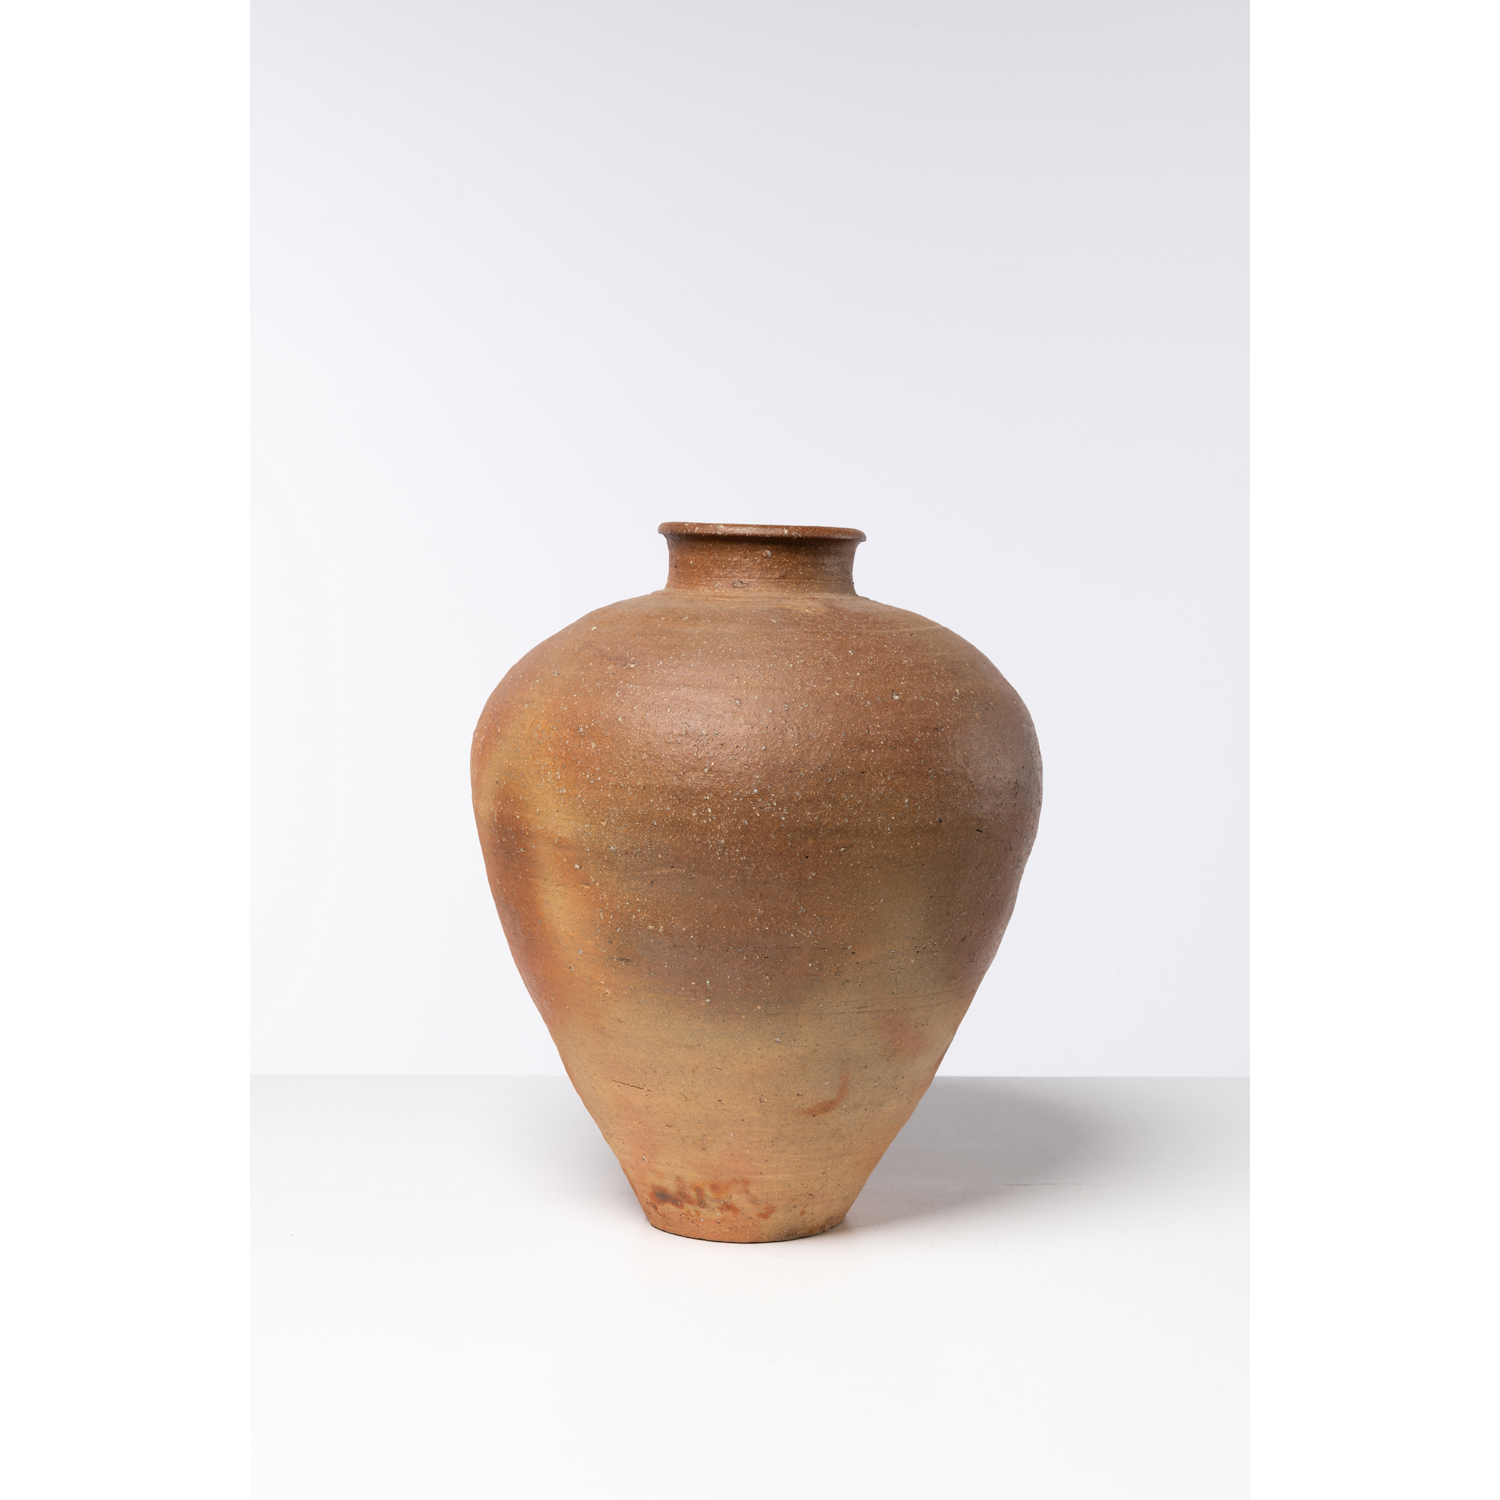 At Auction: Japanese vase, H 45 cm.